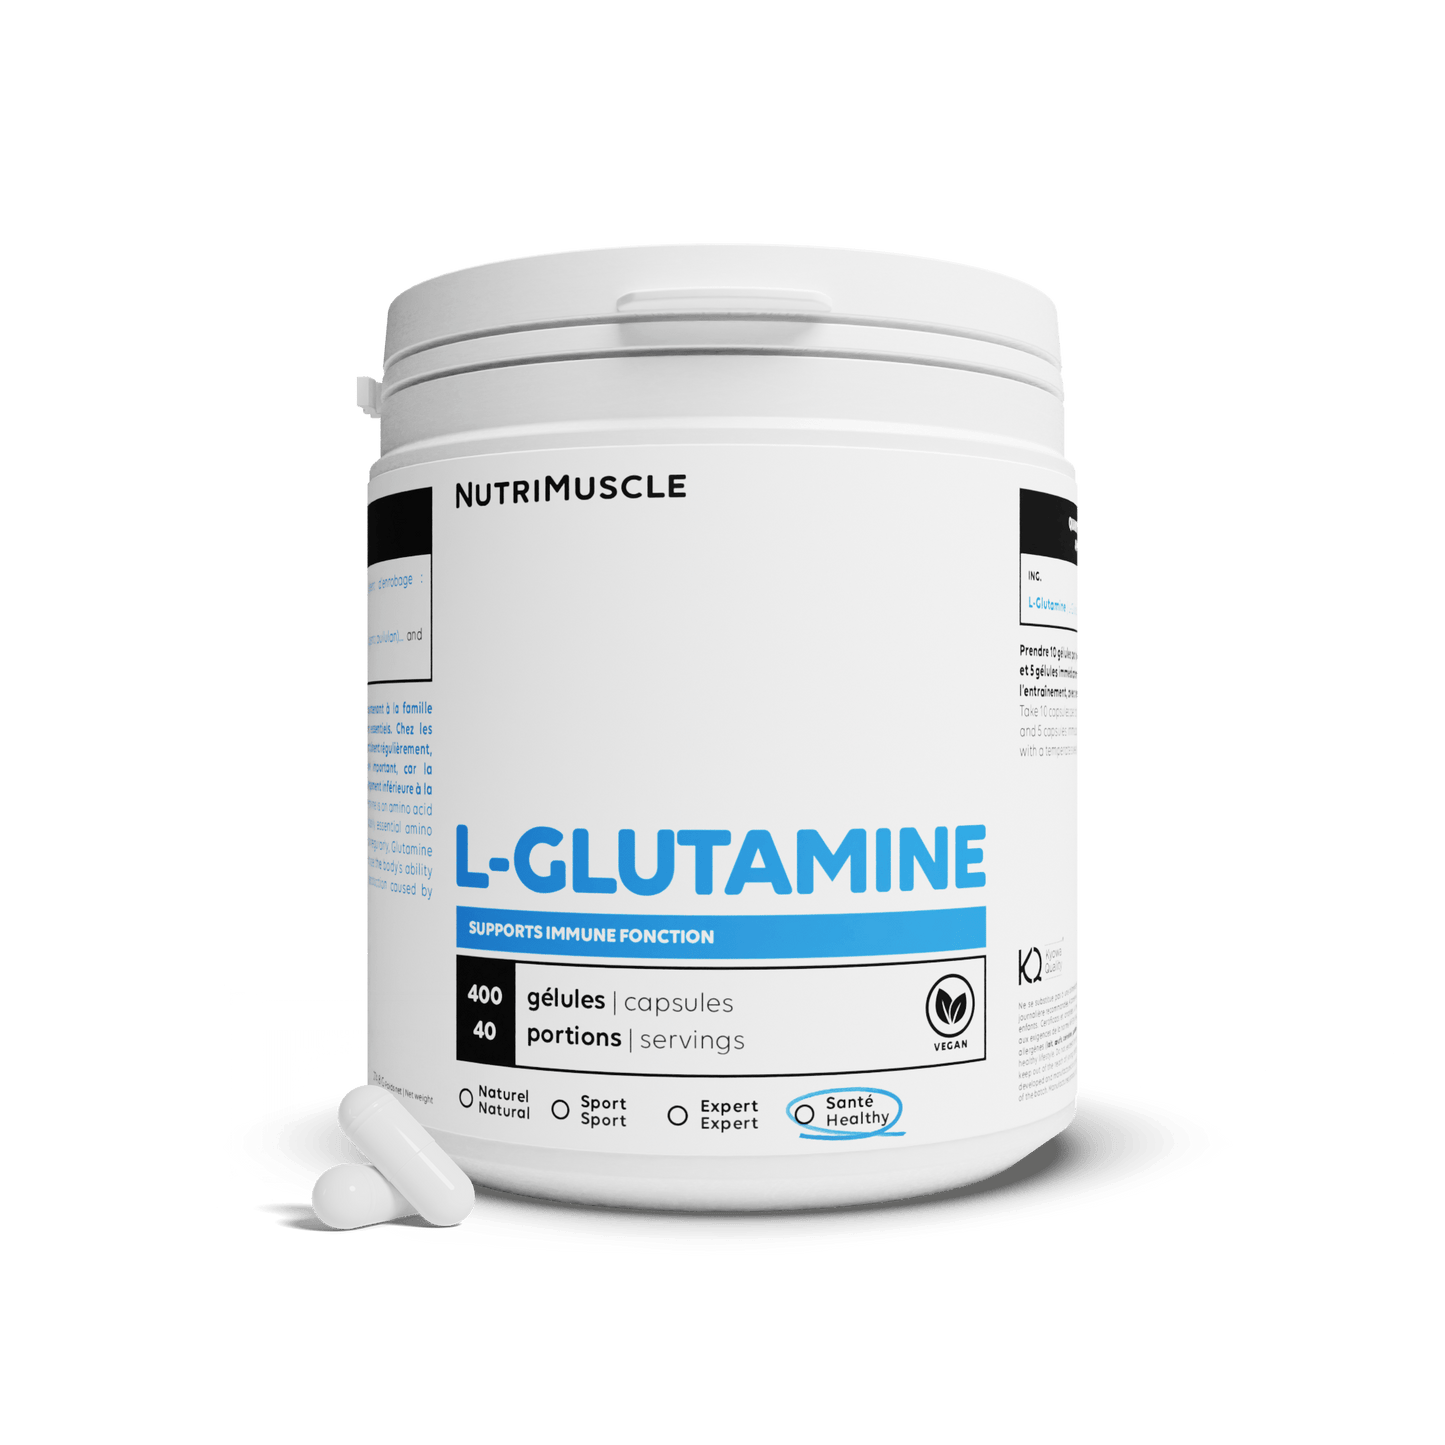 Nutrimuscle Acides aminés 400 gélules Glutamine (L-Glutamine) en gélules